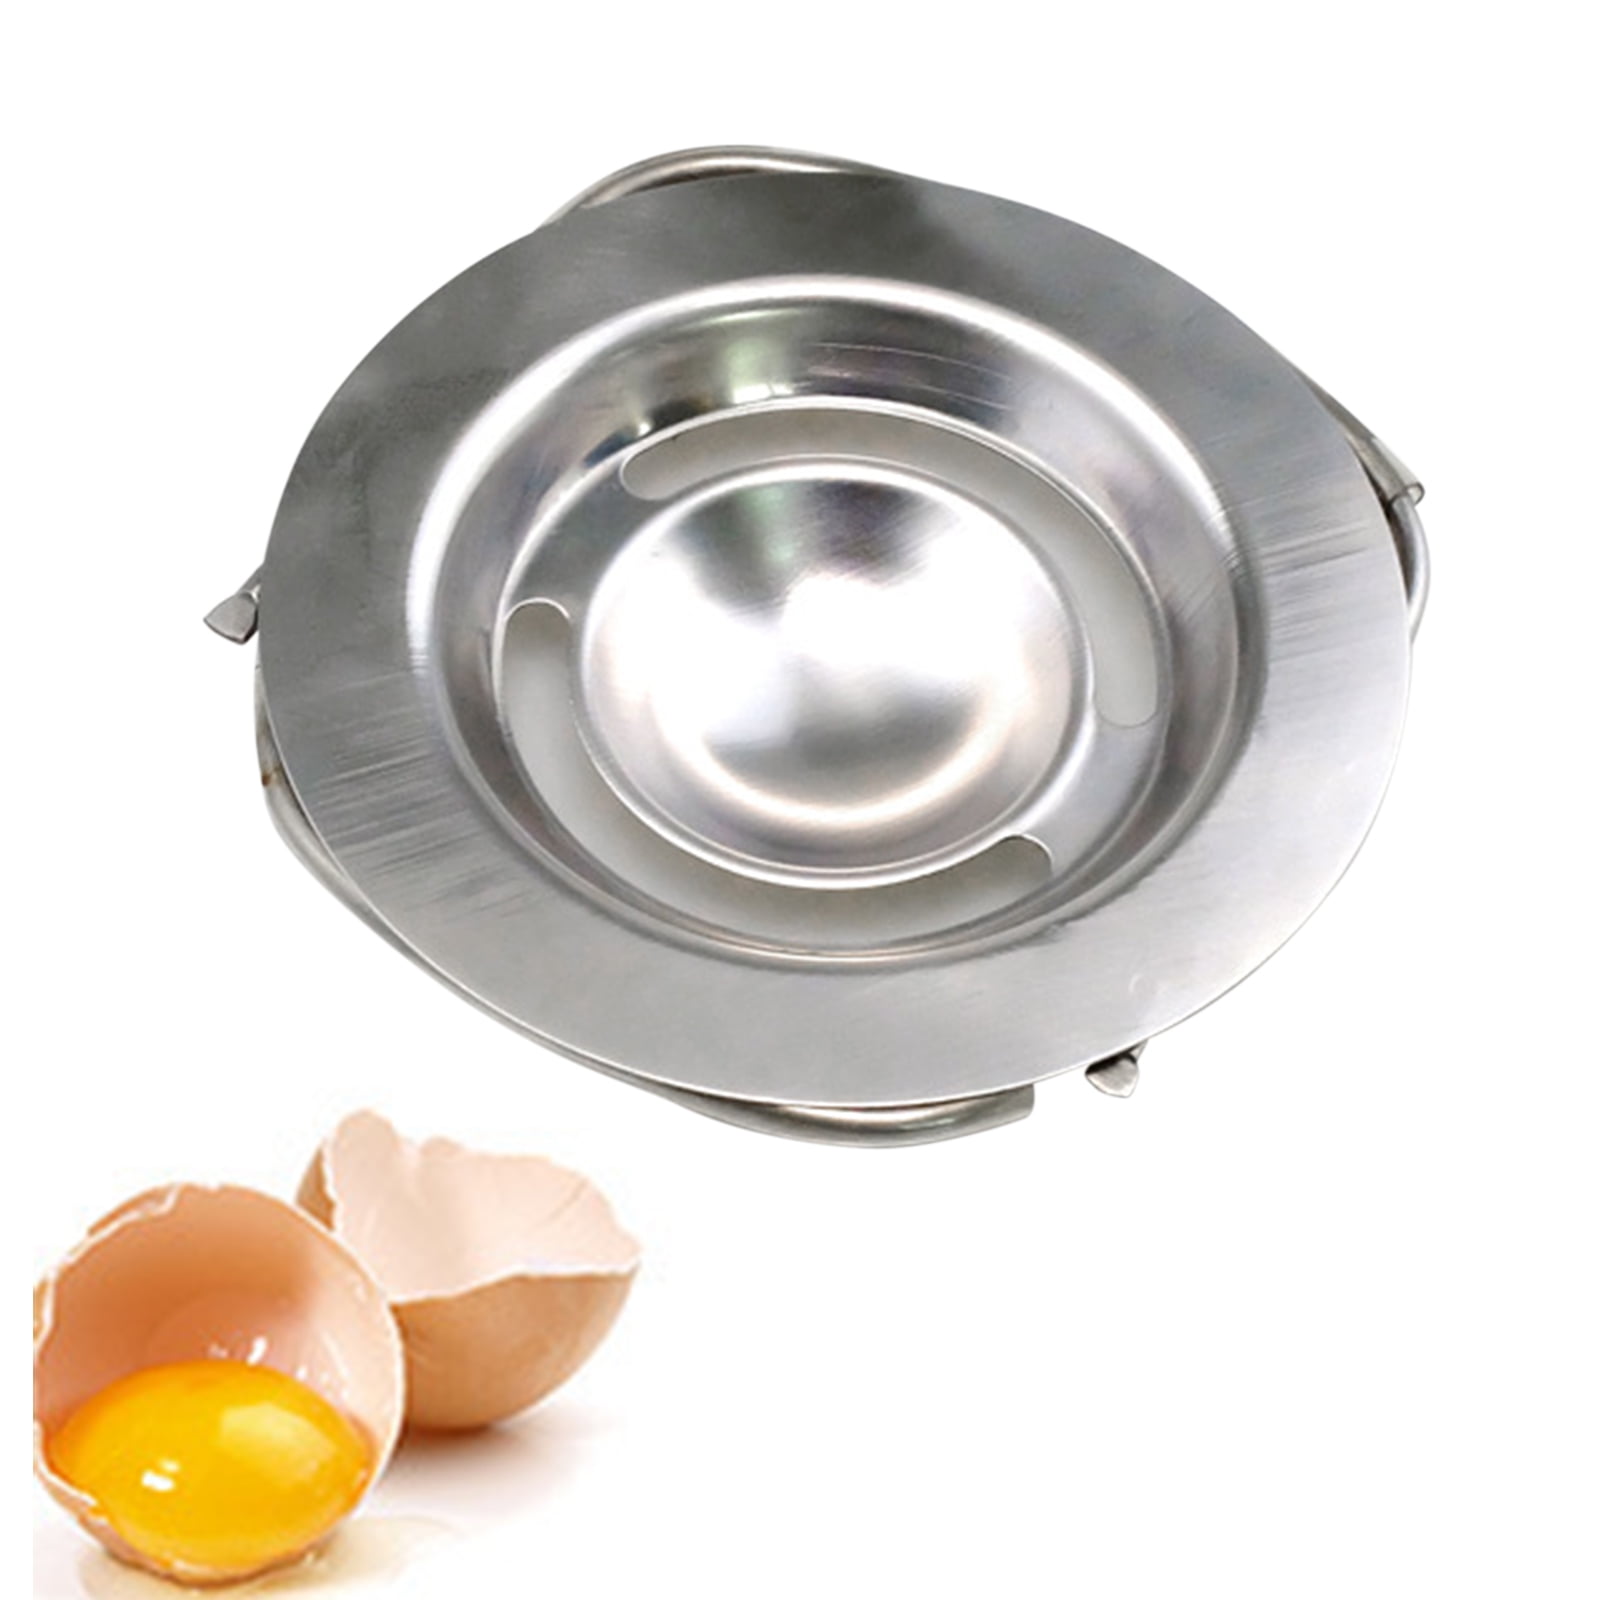 BE_ FT Handheld Egg Divider Stainless Steel Yolk Separator Kitchen Cooking Tool 